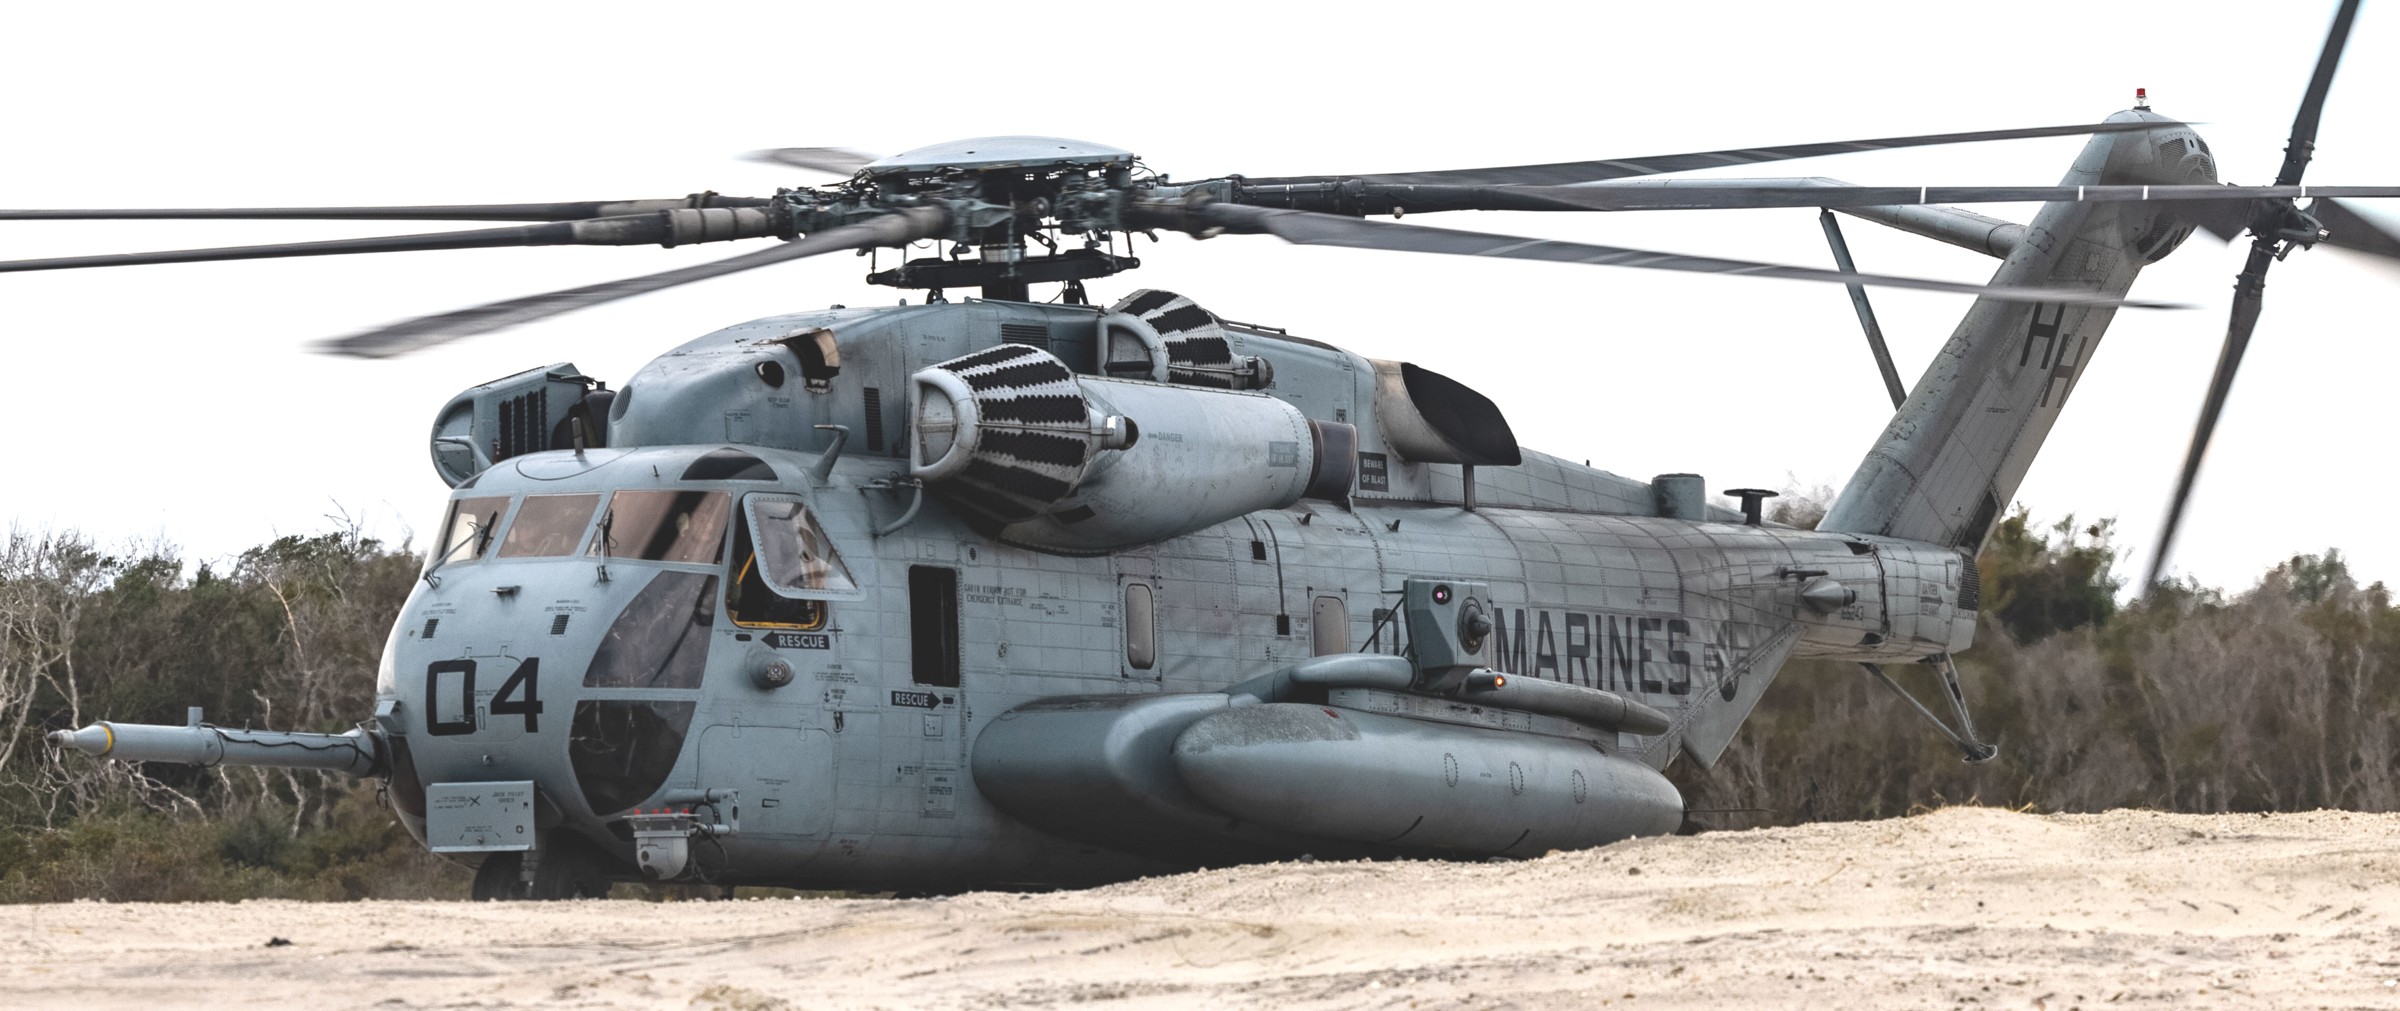 hmh-366 hammerheads ch-53e super stallion marine heavy helicopter squadron usmc camp lejeune 177